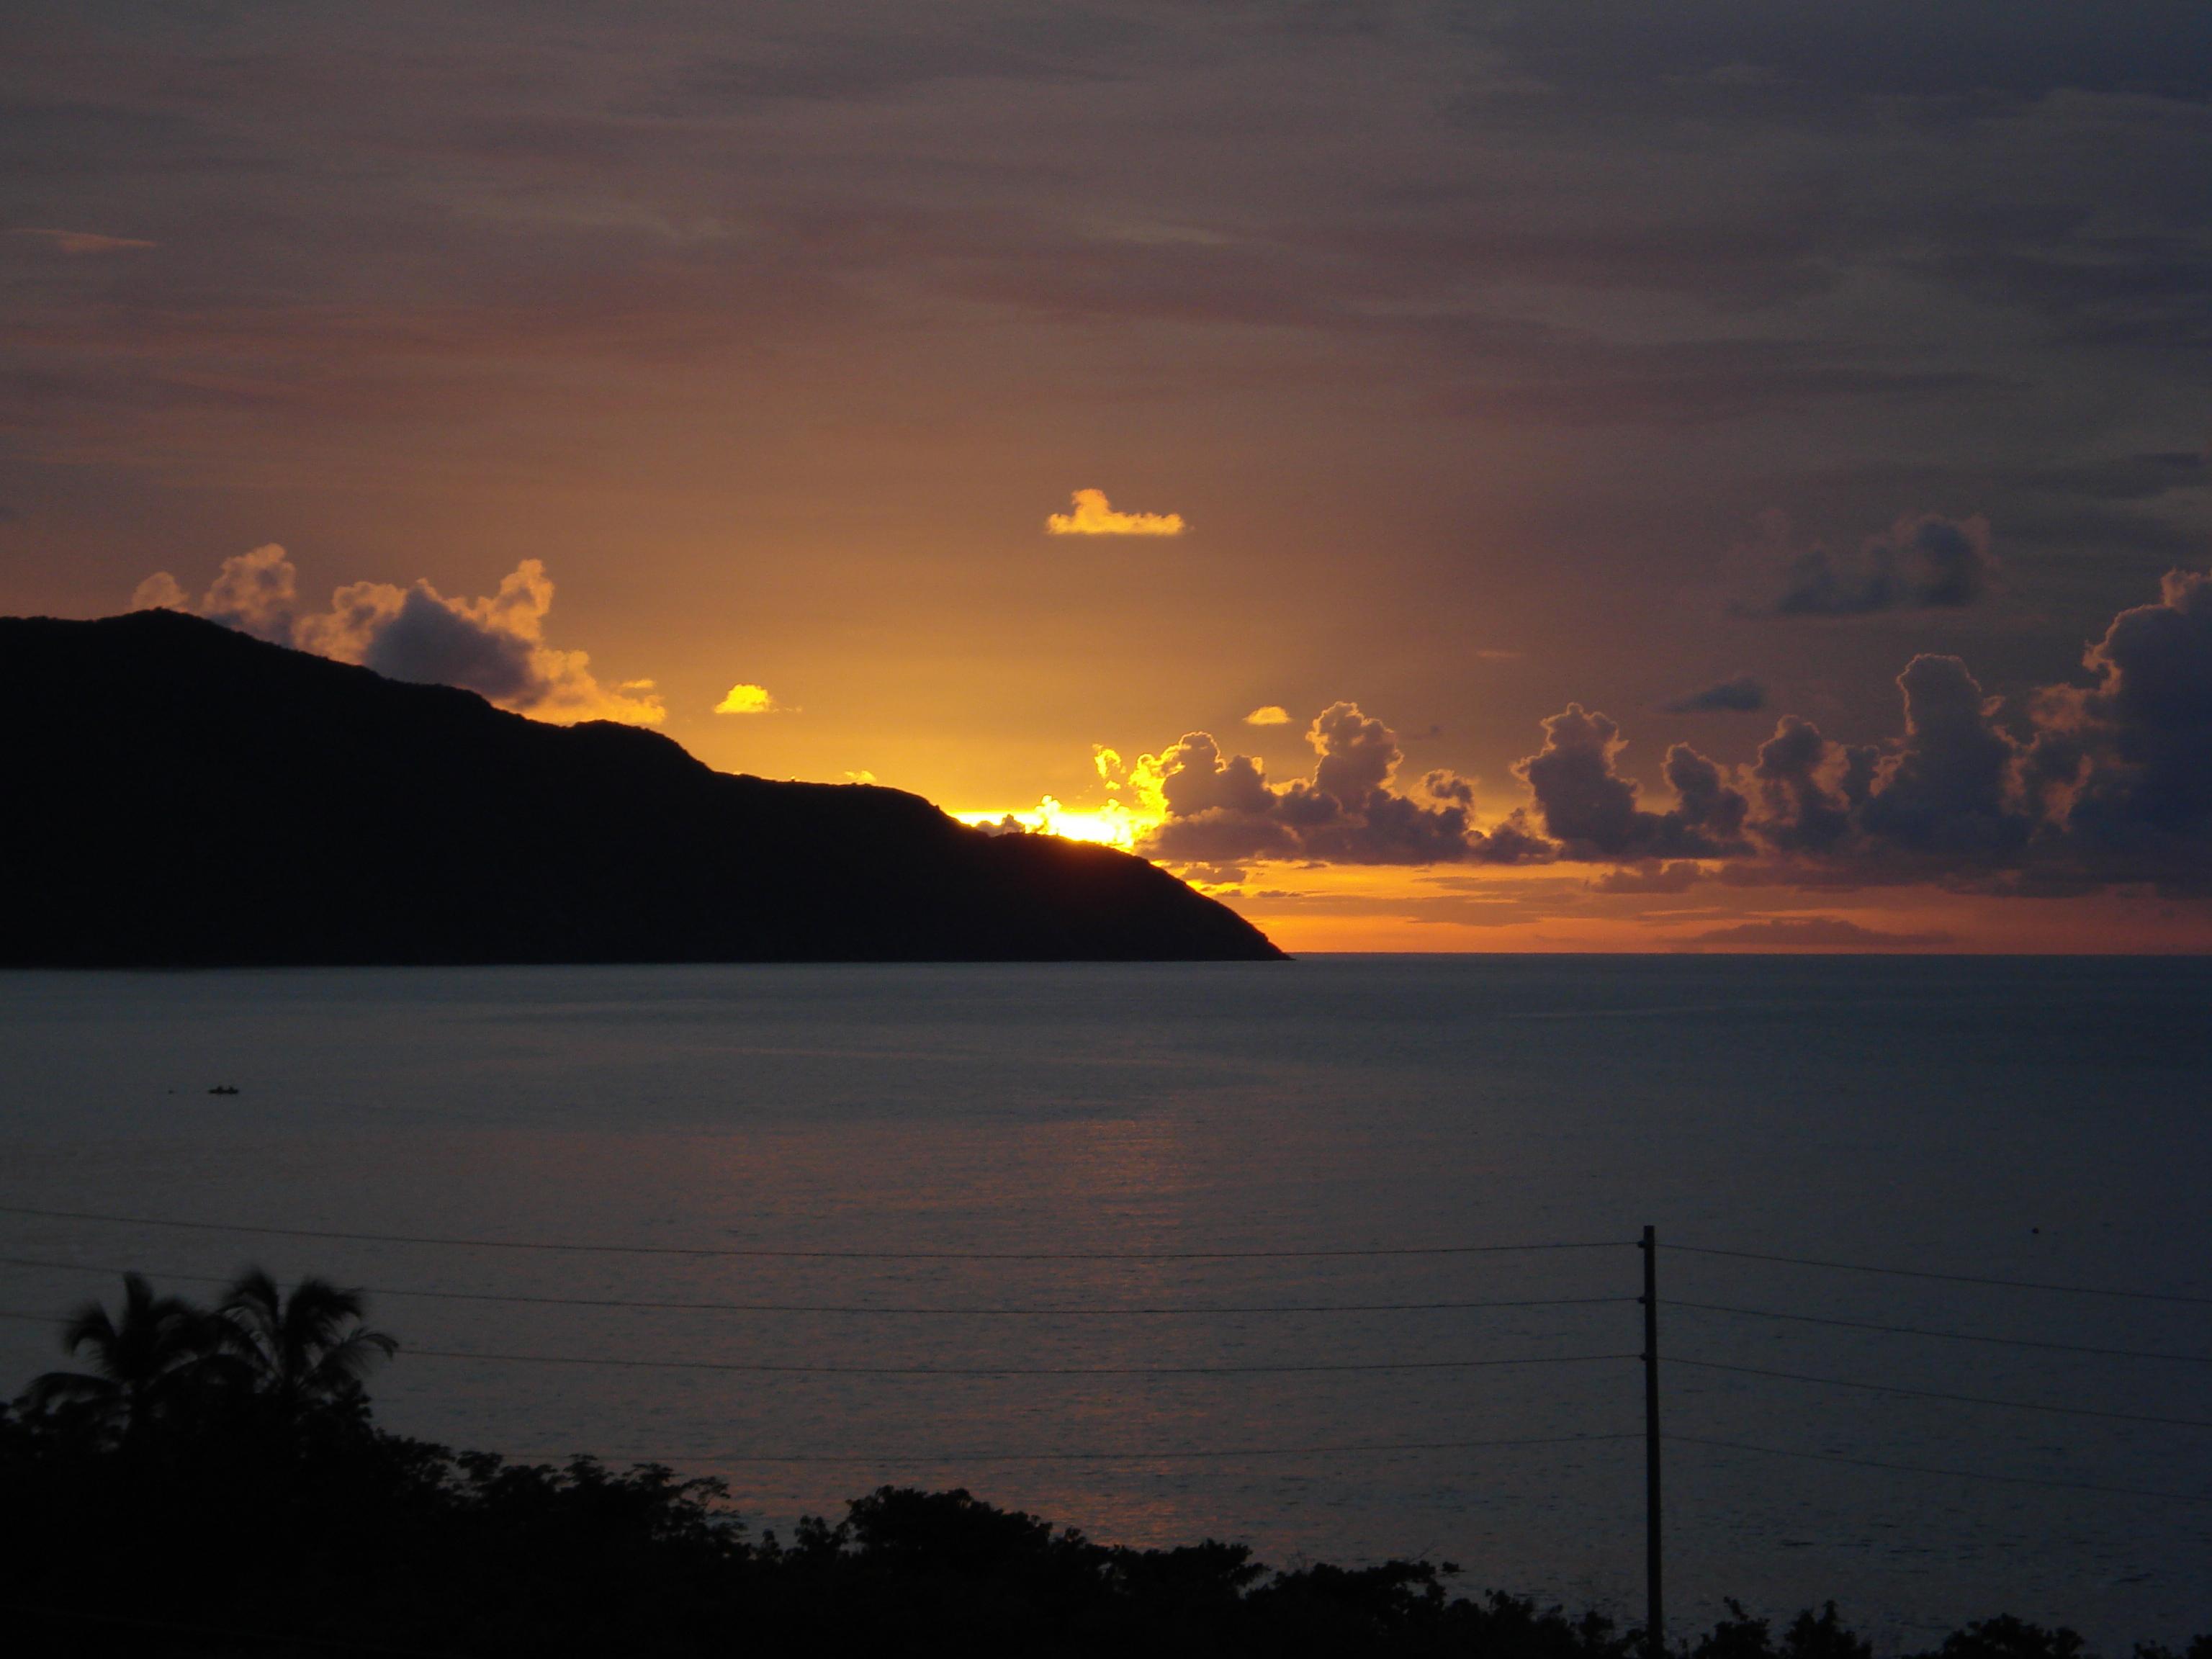 St. Croix Sunset - October 2007